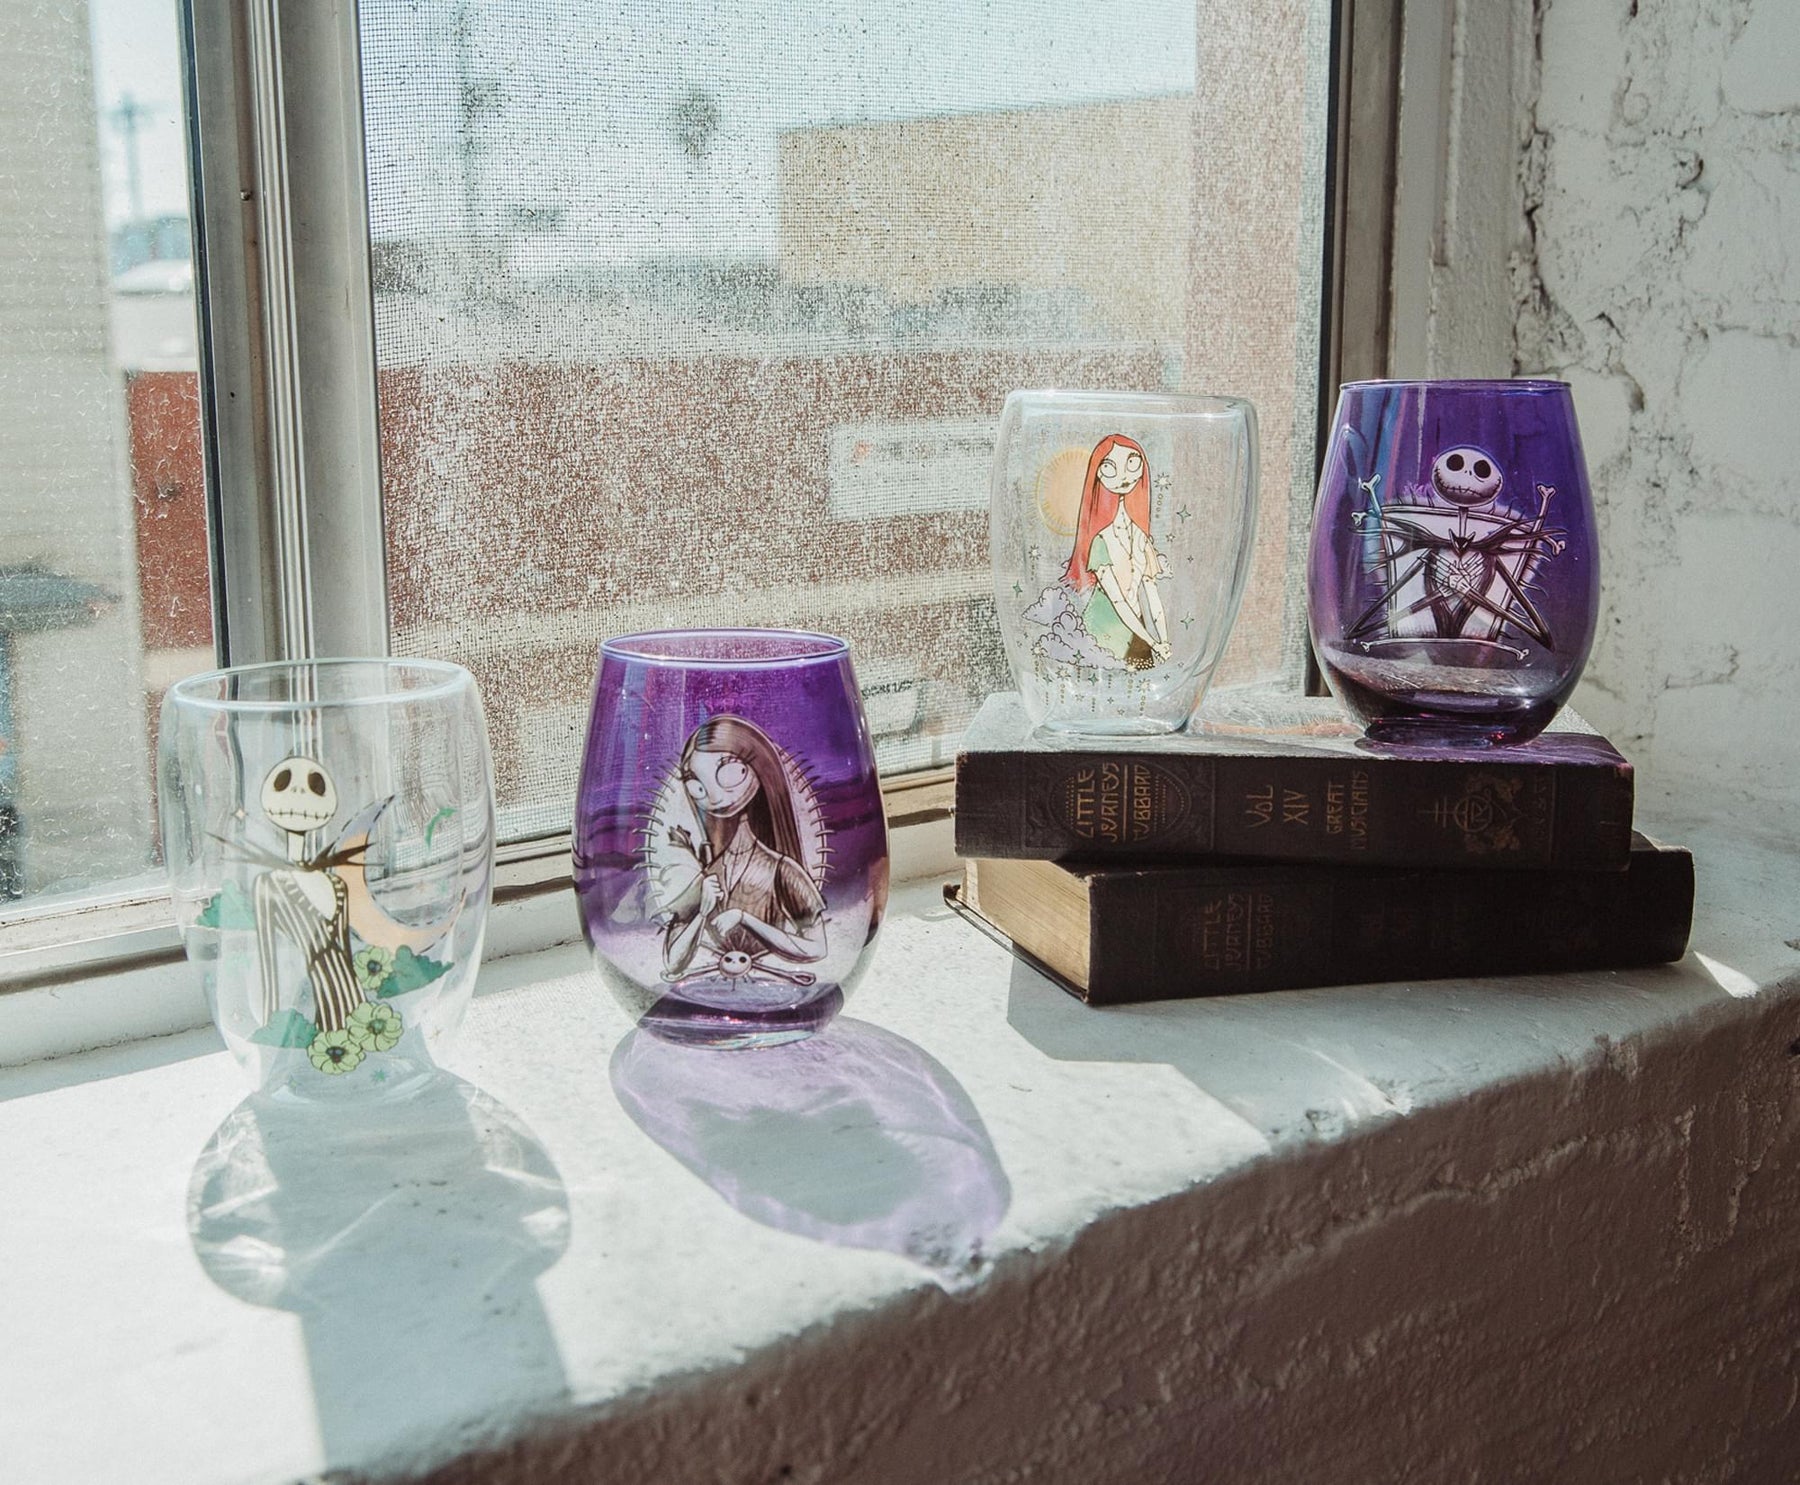 Disney The Nightmare Before Christmas Sally Purple Stemless Wine Glass